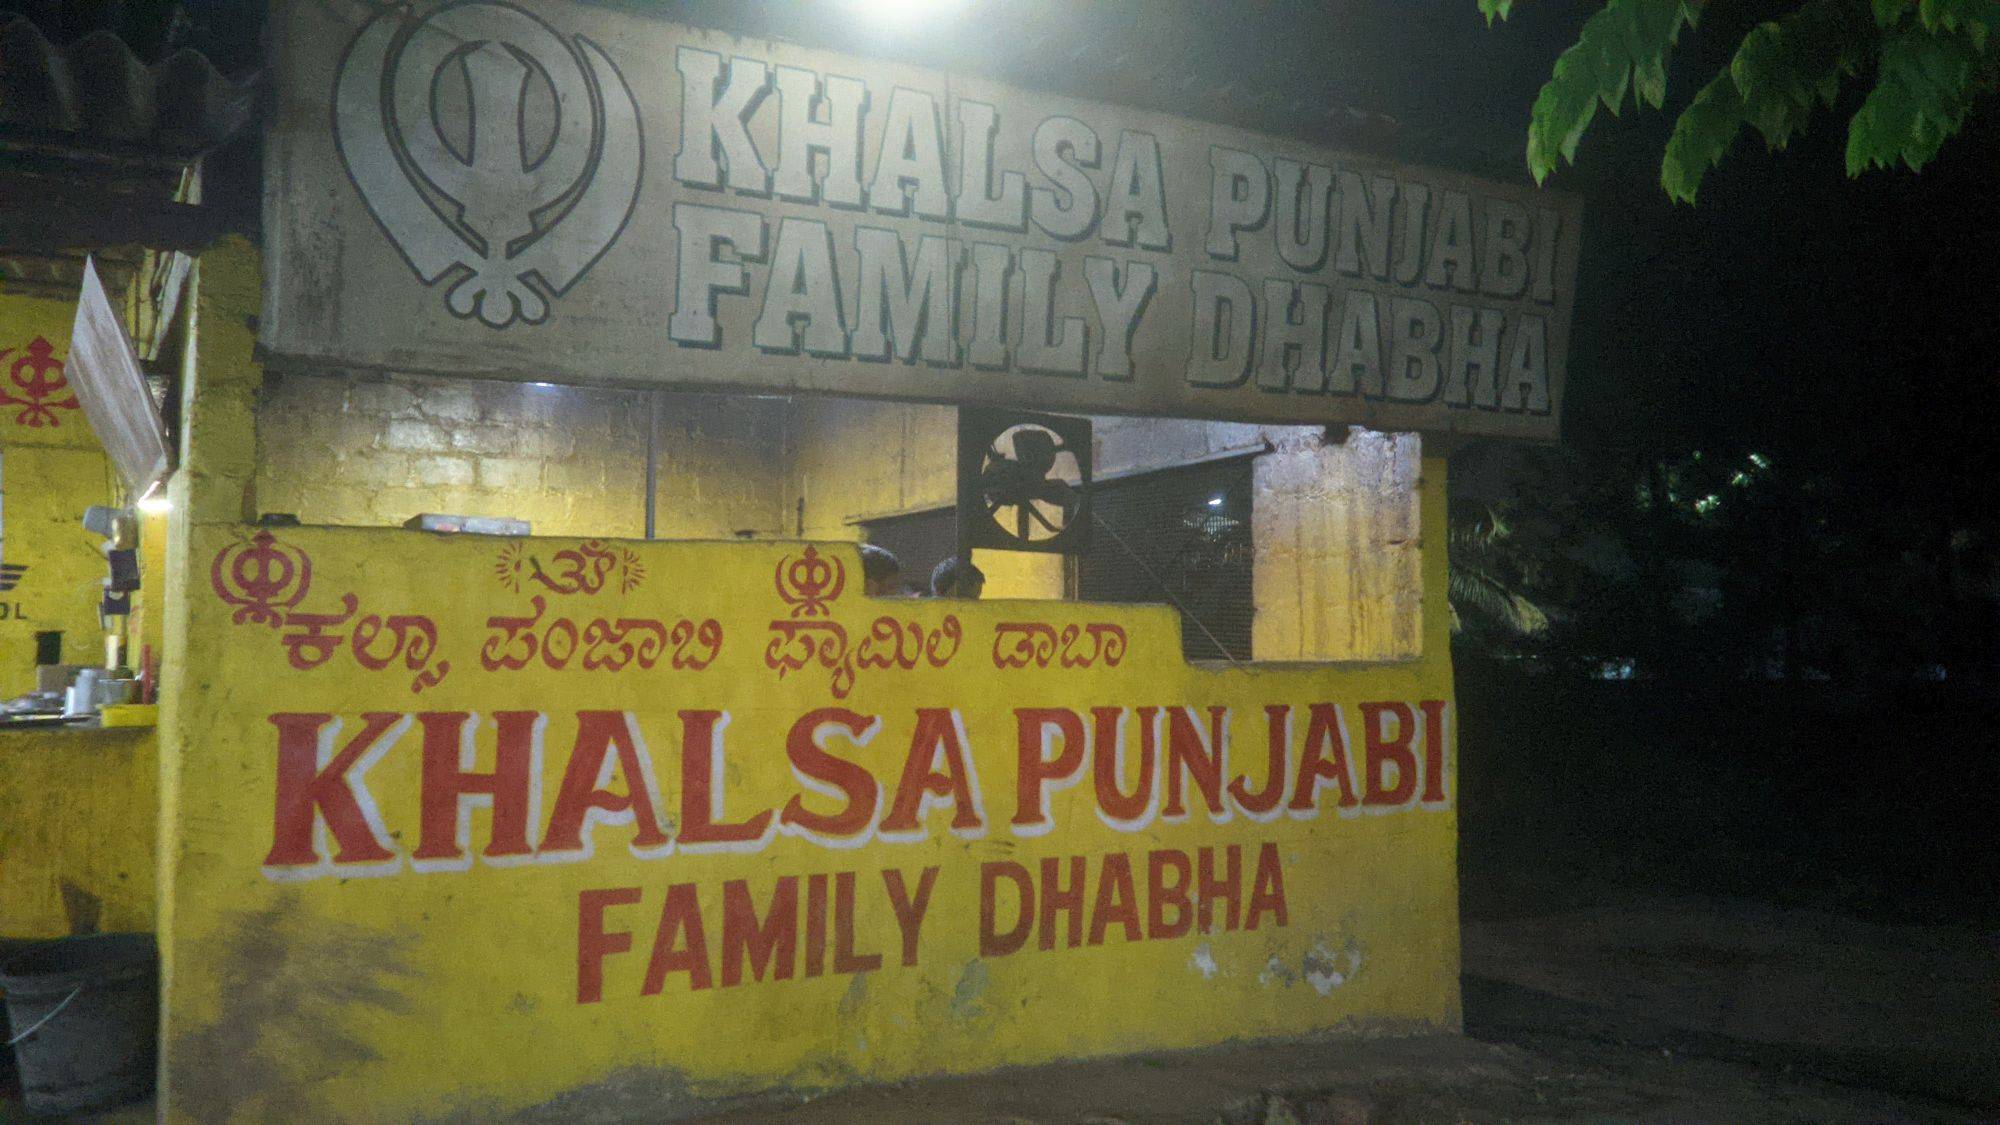 Khalsa Punjabi Family Dhaba - PhenoMenal World